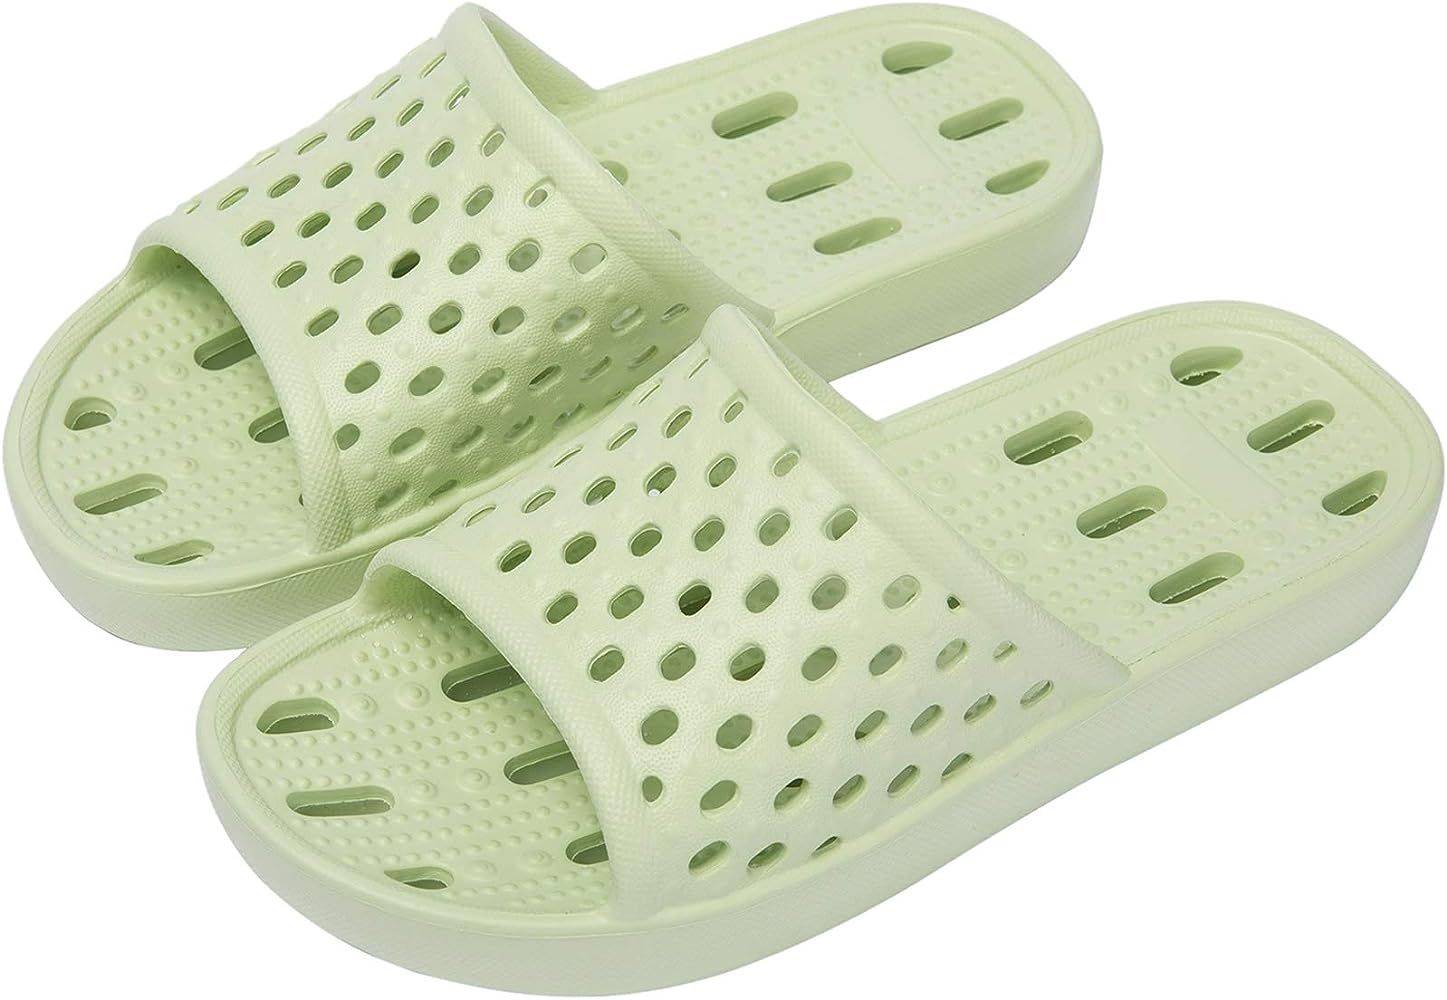 WOTTE Shower Sandals Women Quick Drying Bath Slippers Non Slip Dorm Shoes | Amazon (US)